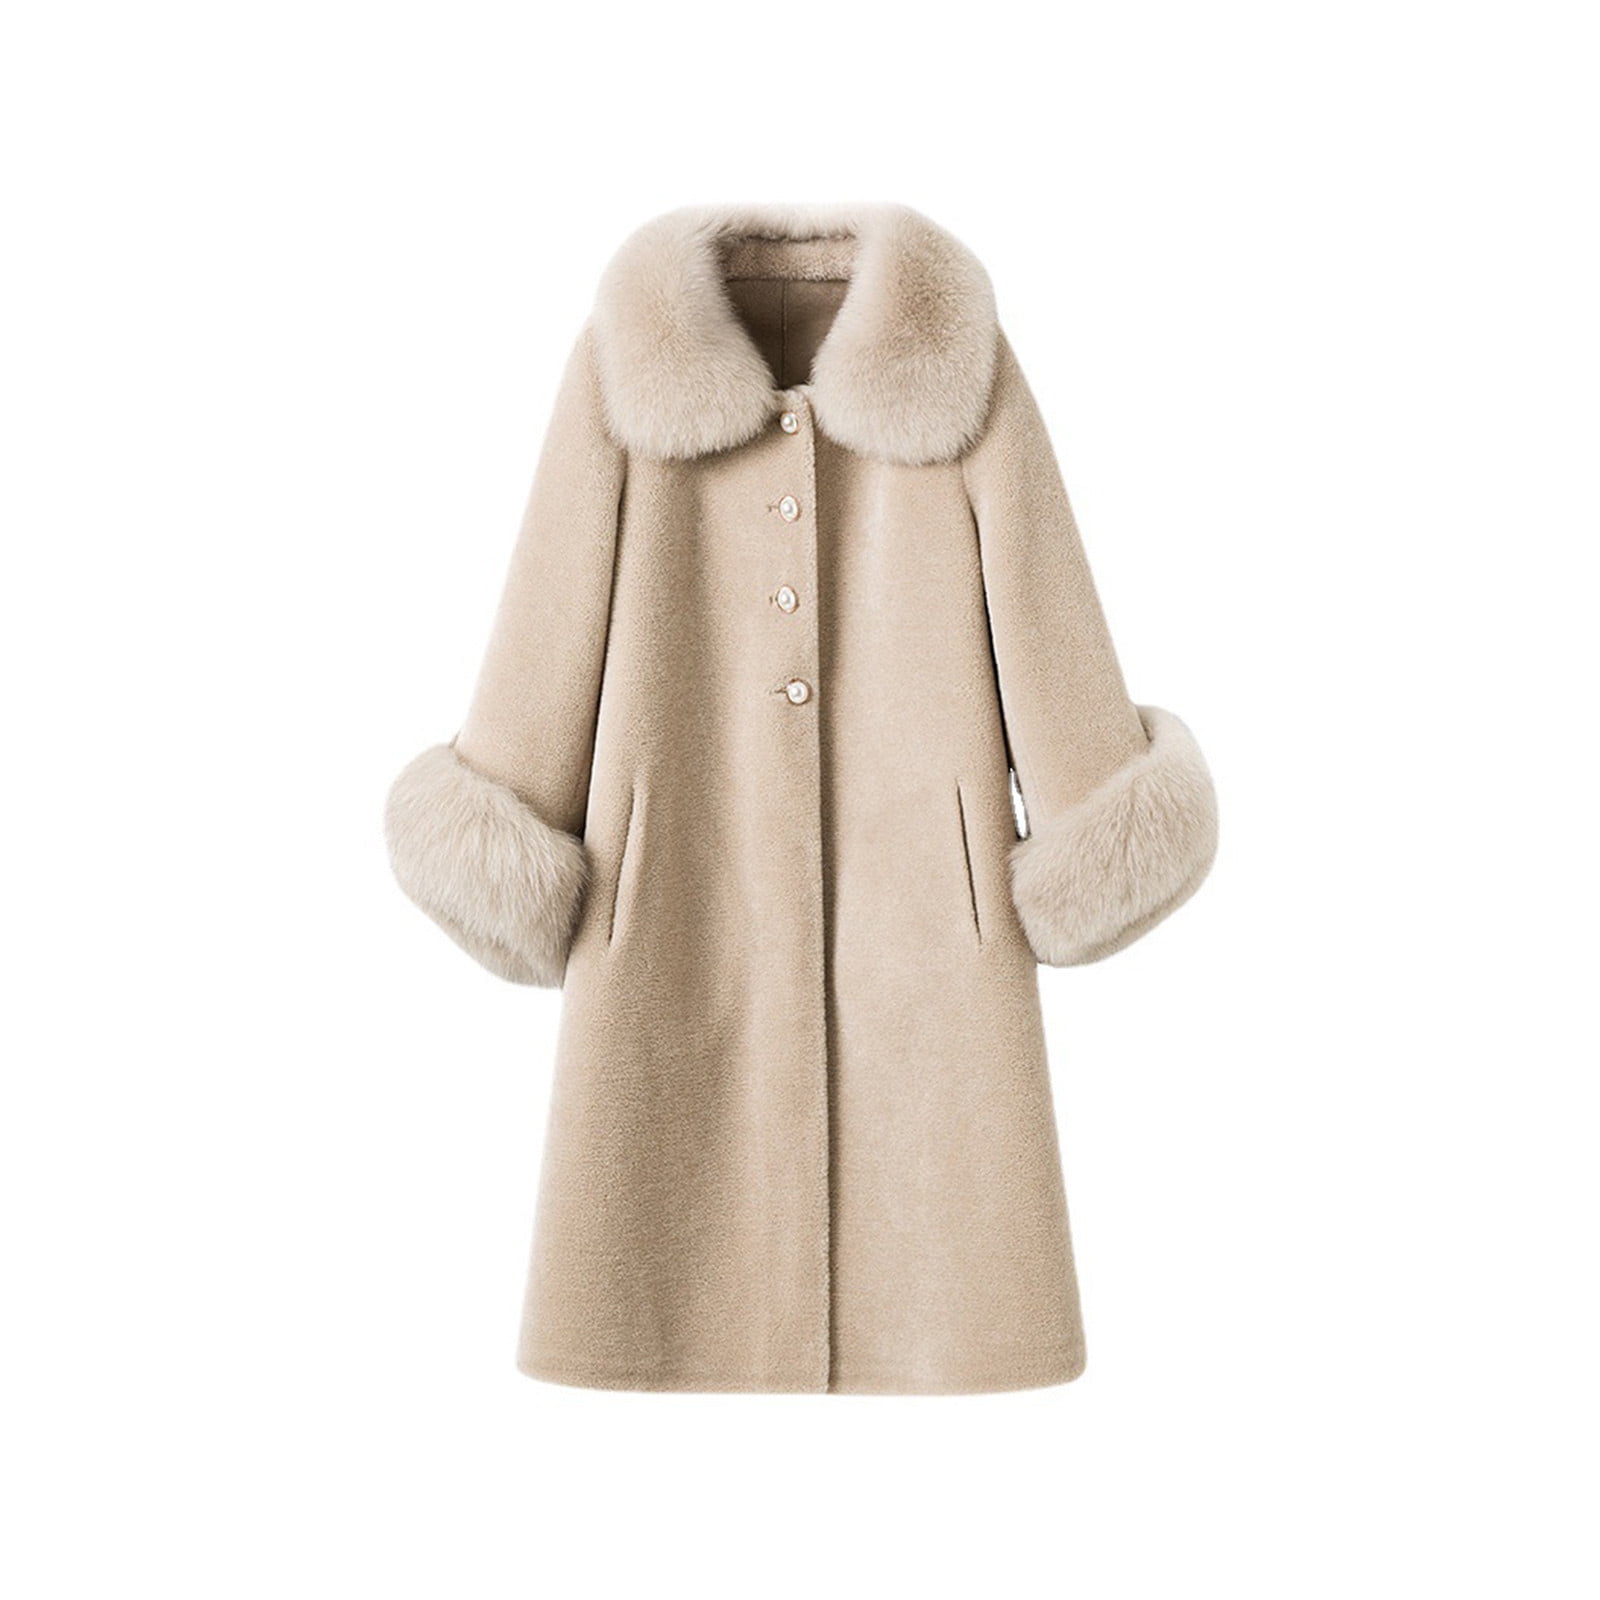 pbnbp Winter Coats for Women Warm Fluffy Faux Fur Collar Button Down ...